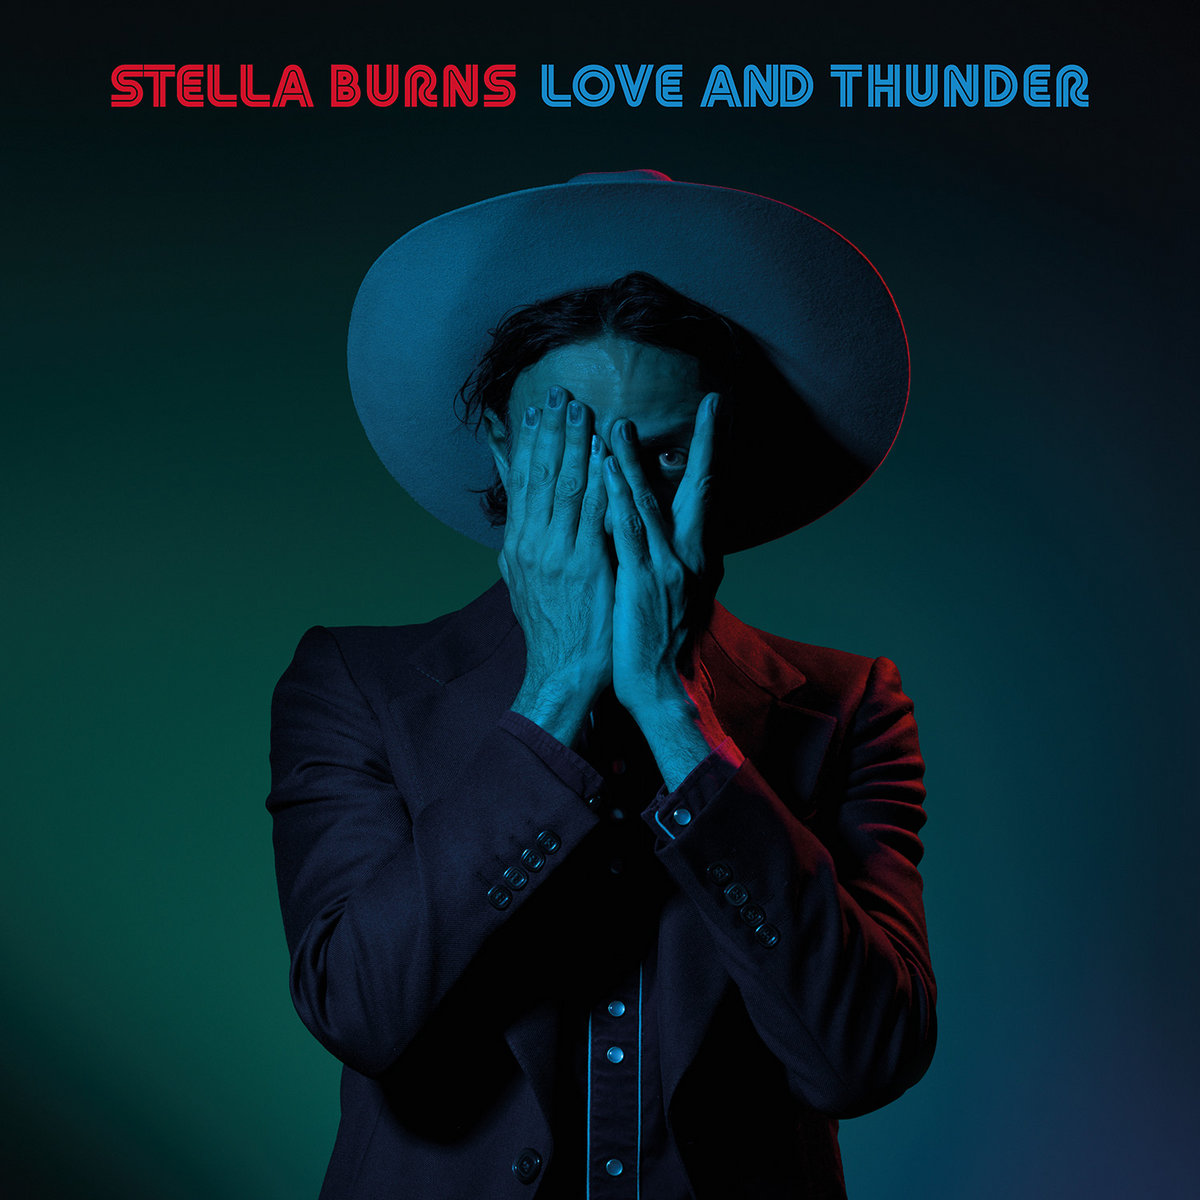 Stella Burns “Love and Thunder” single artwork